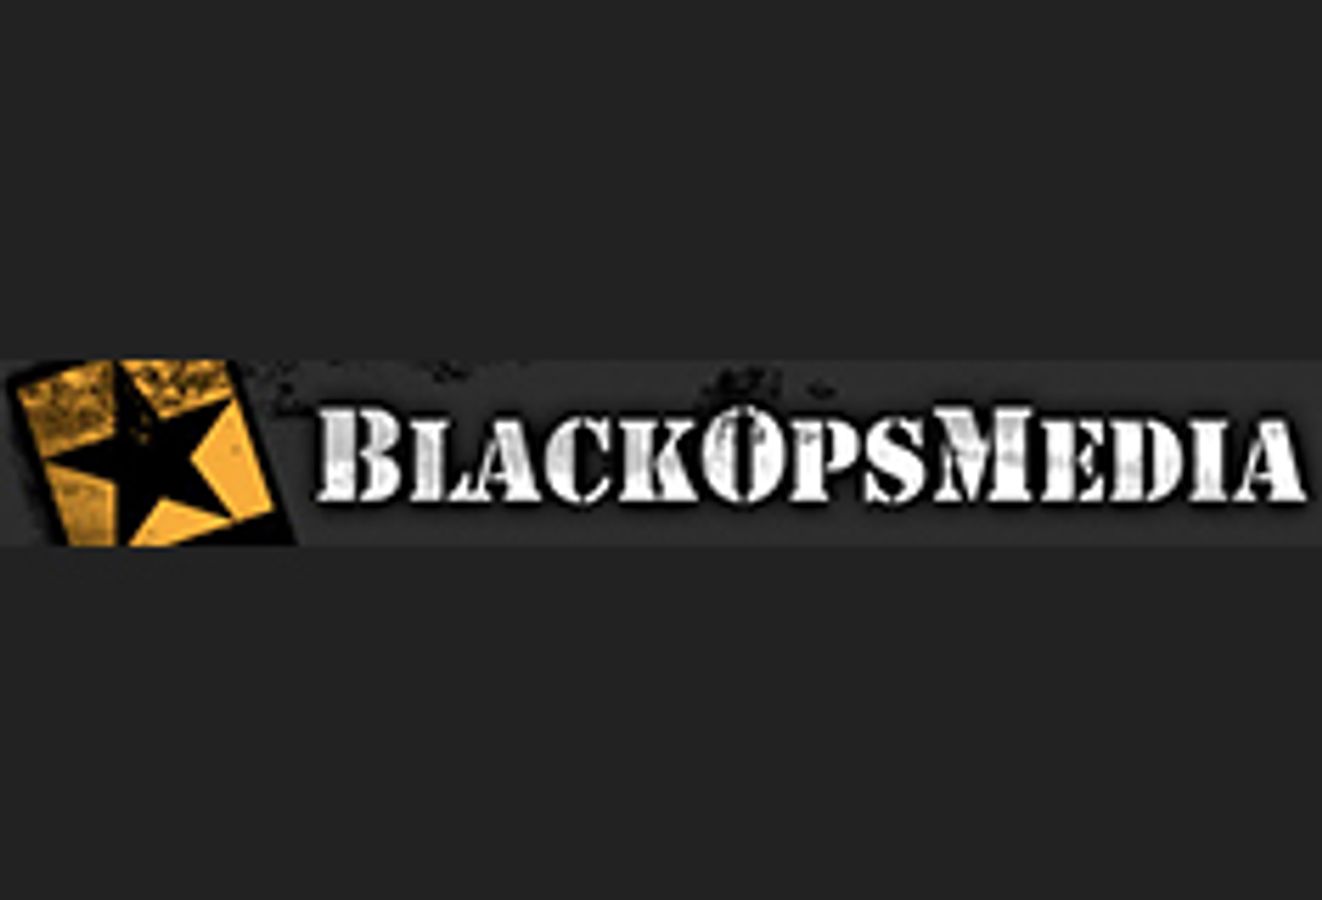 Black Ops Media